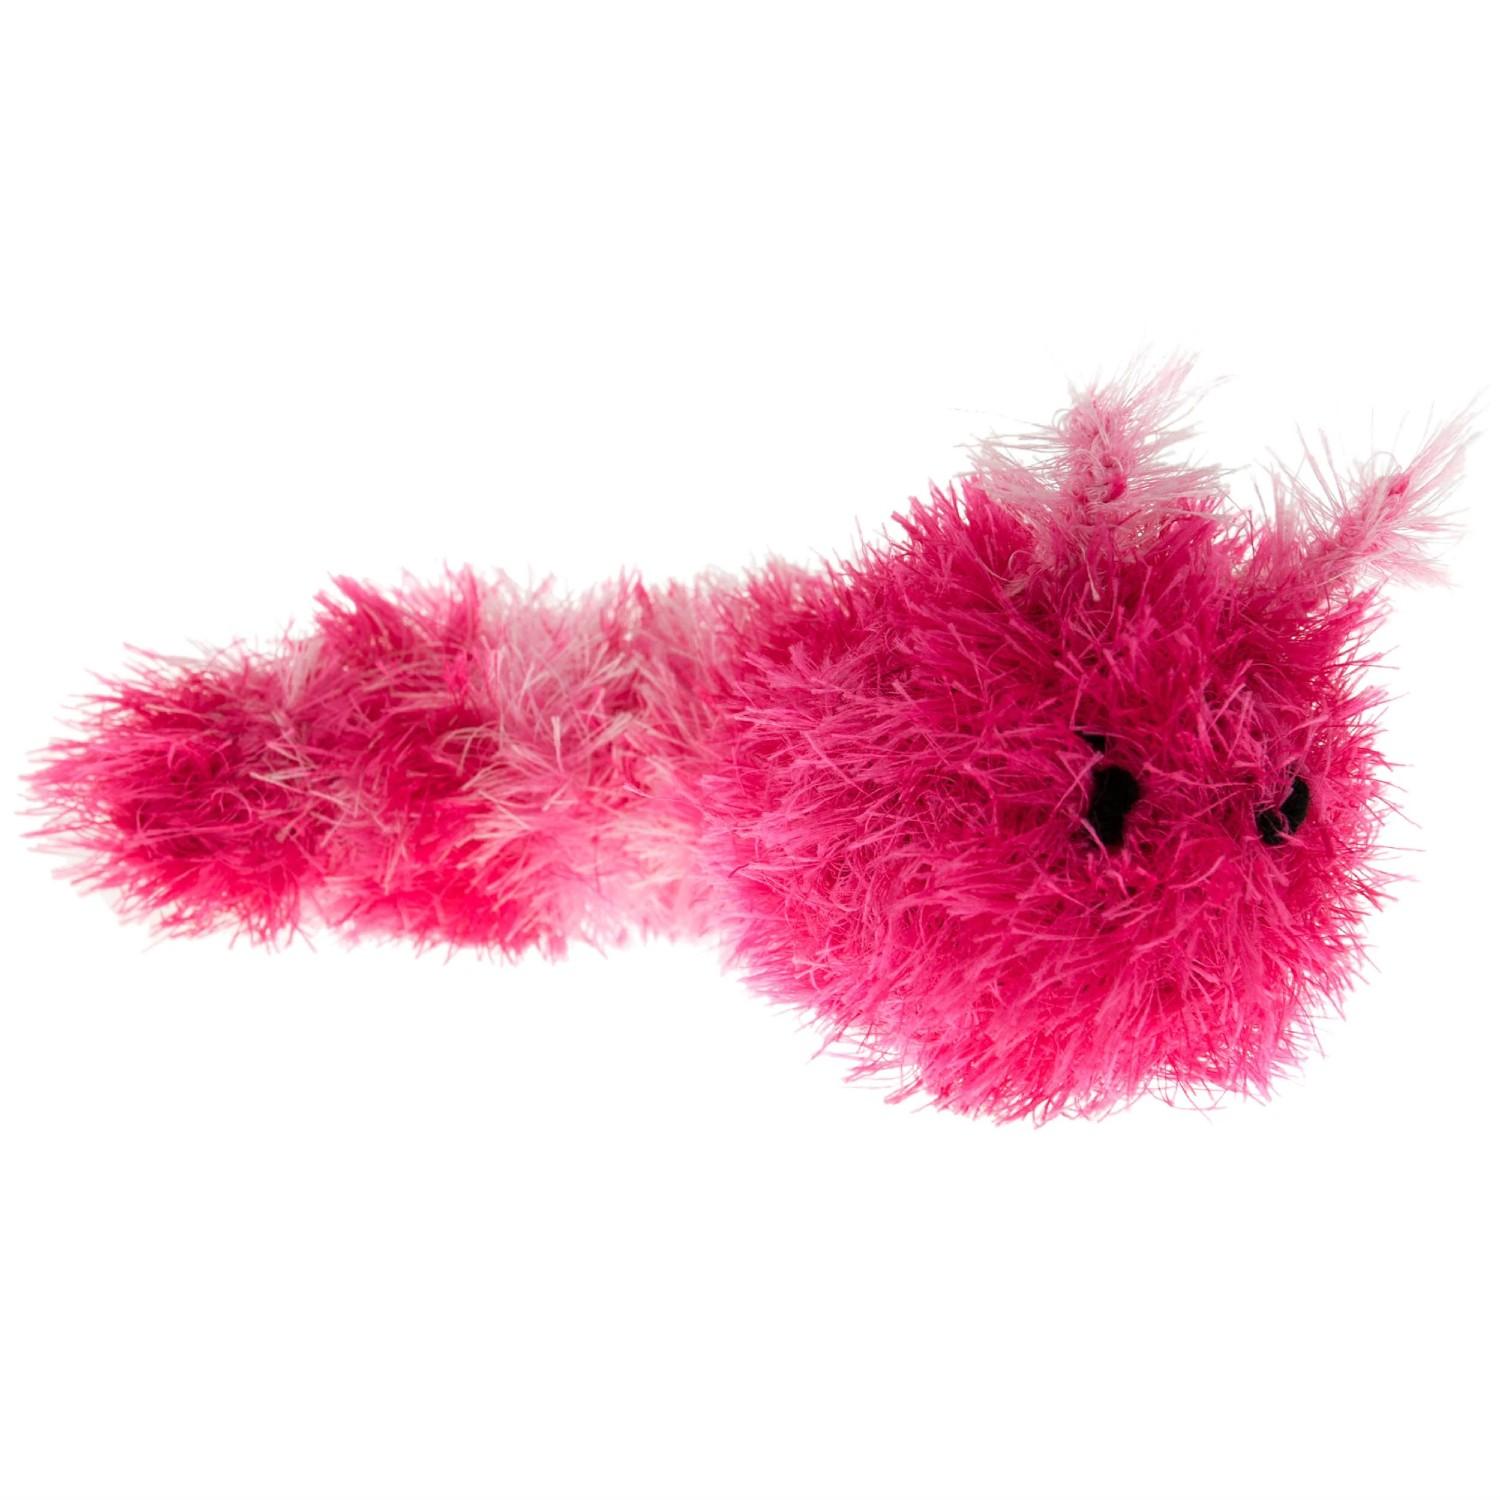 OoMaLoo Handmade Caterpillar Dog Toy - Pink